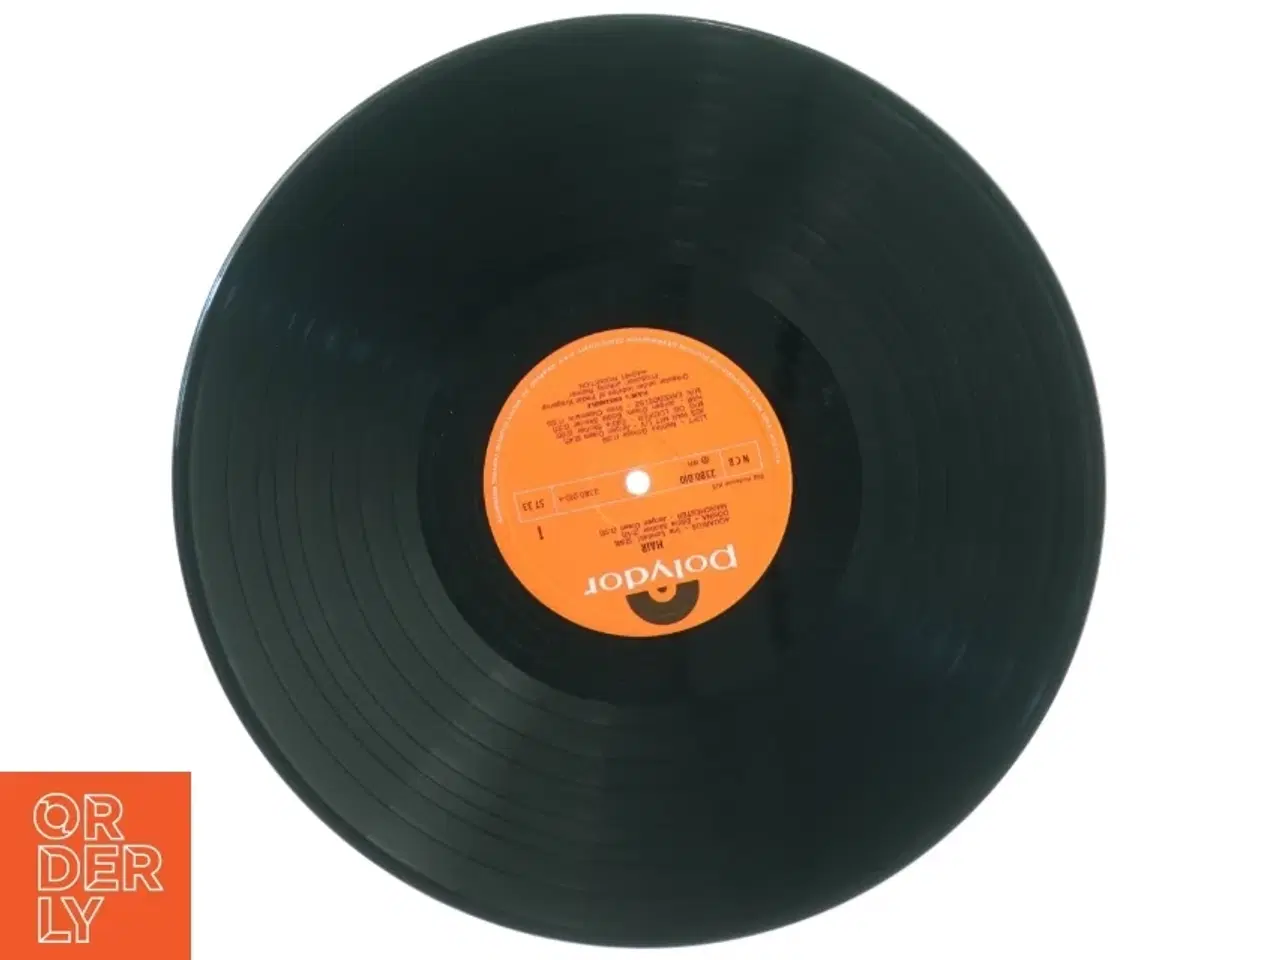 Billede 4 - Hair Musical LP fra Polydor (str. 31 x 31 cm)